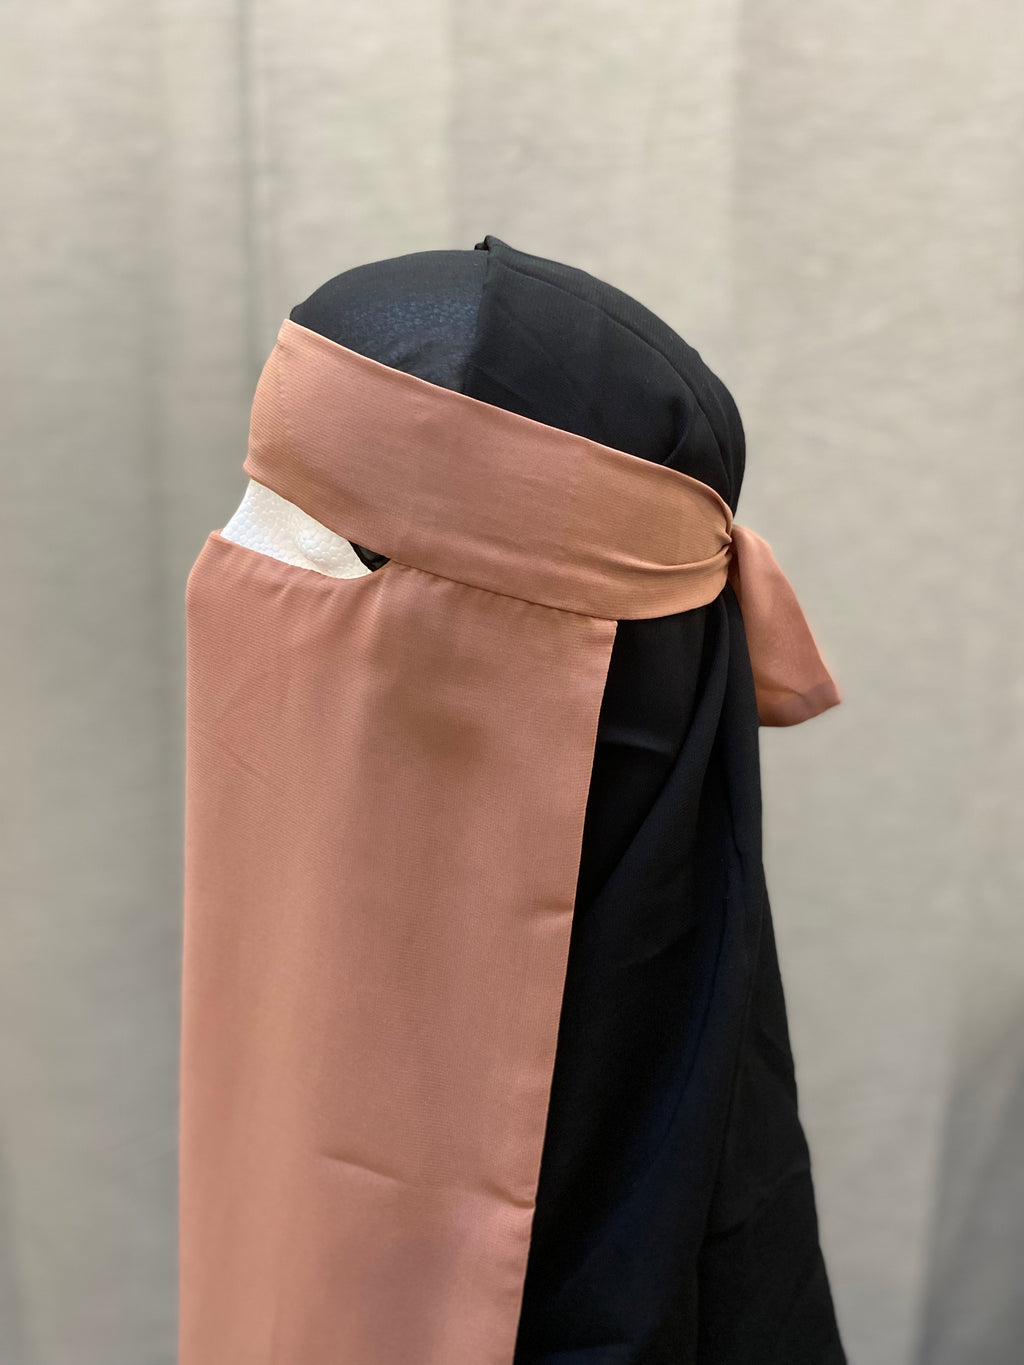 veil-and-virtue-single-layer-niqab-